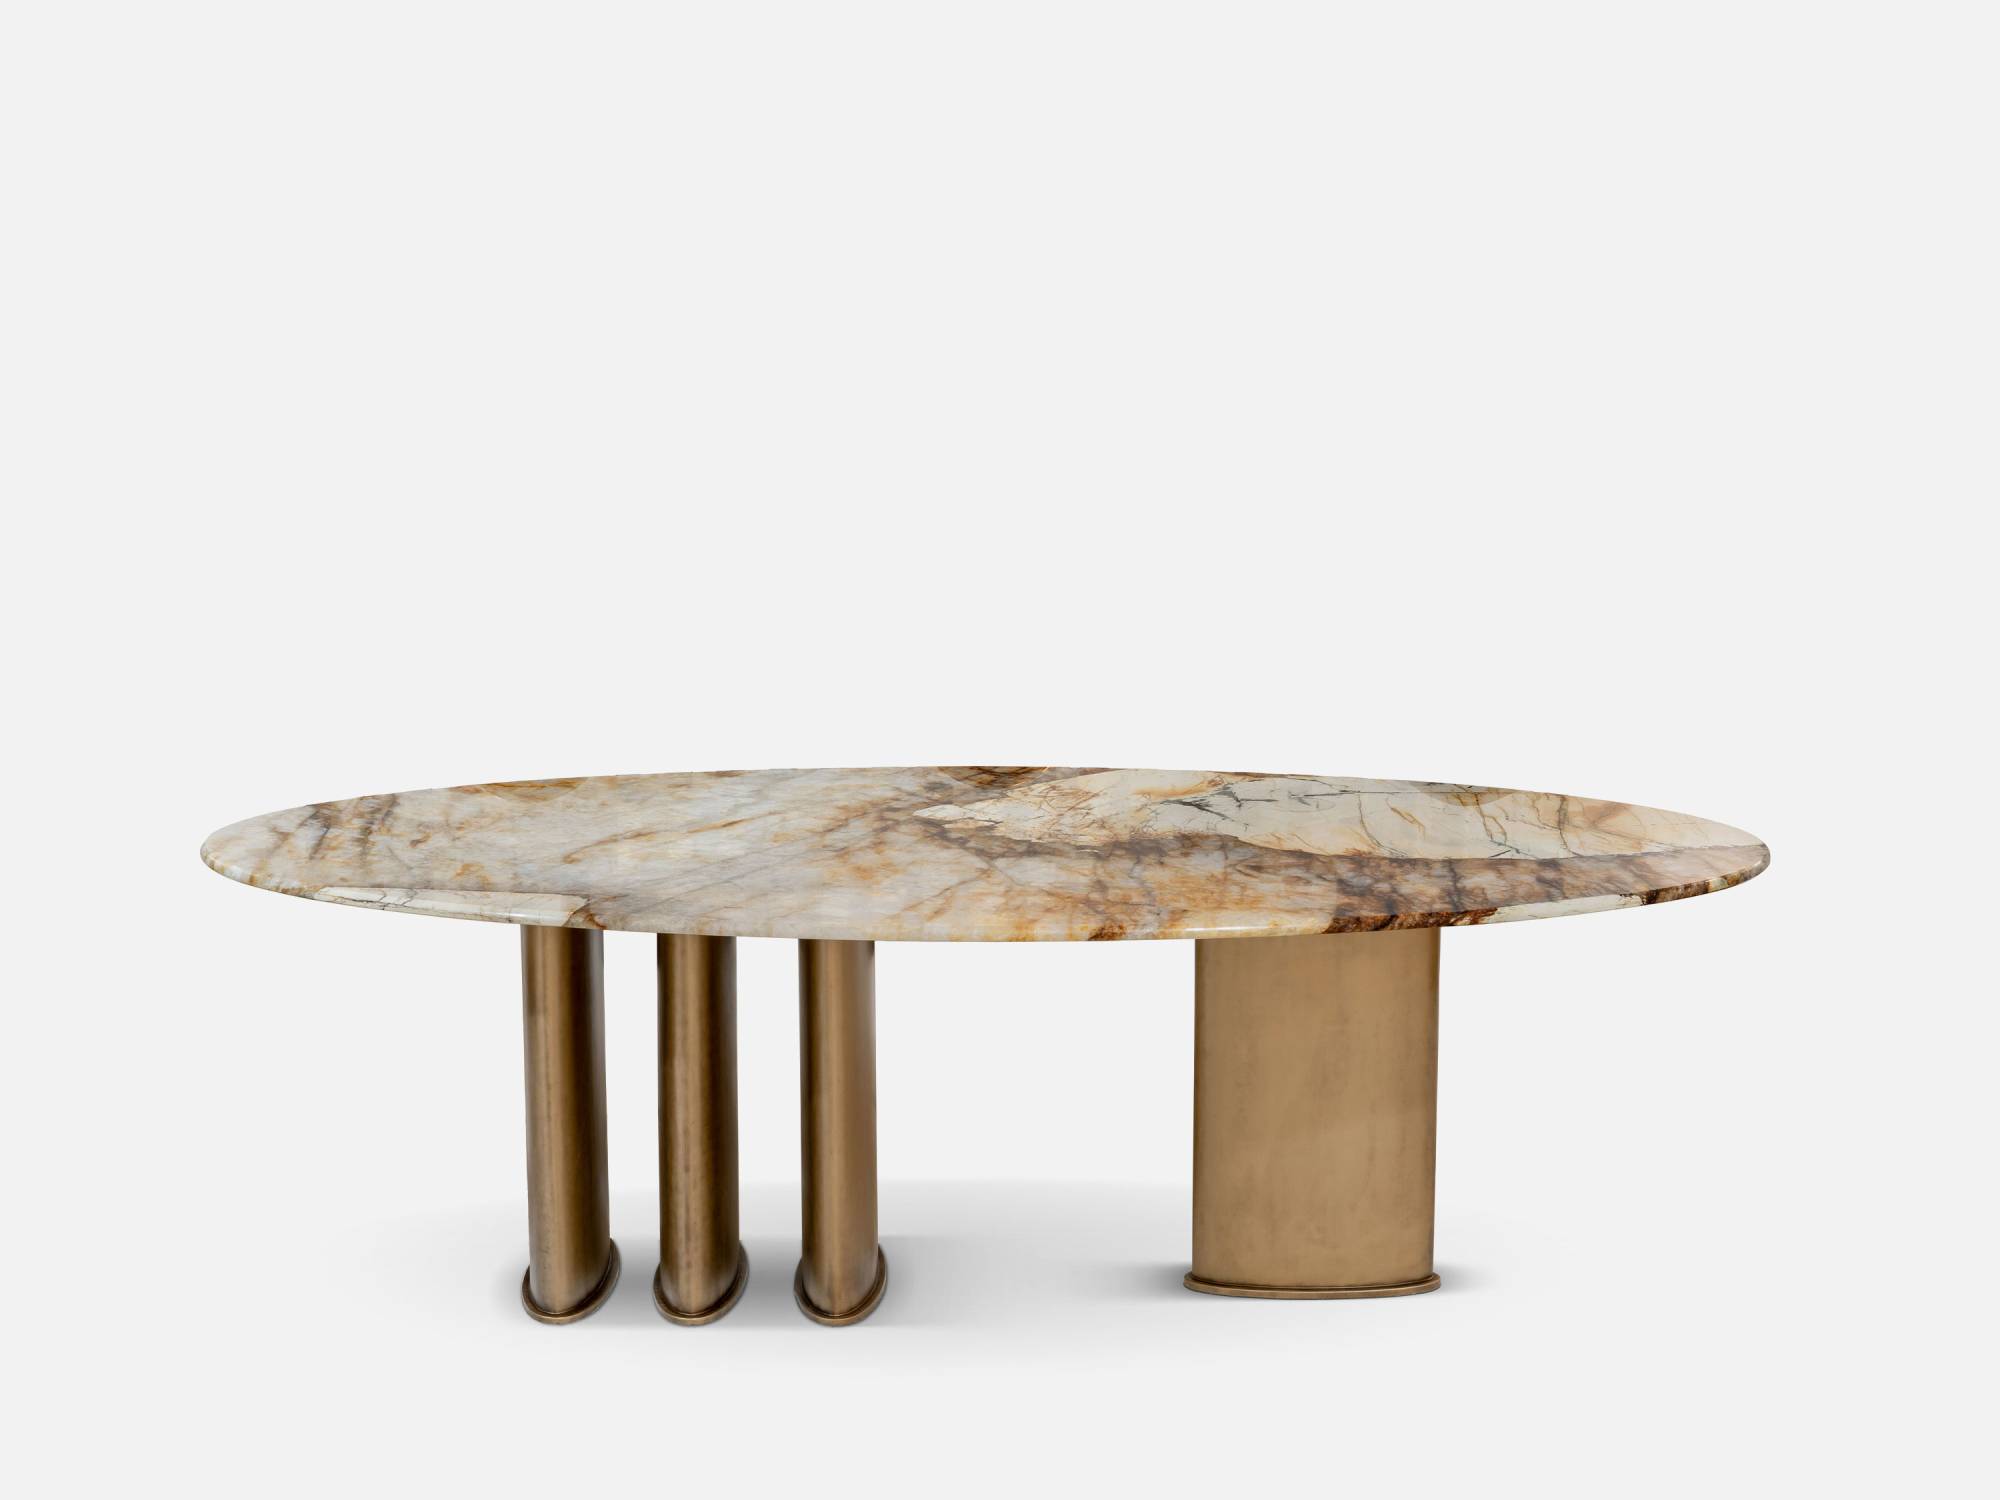 ART. 2278 – C.G. Capelletti Italian Luxury Classic Tables. Made in Italy classic interior design